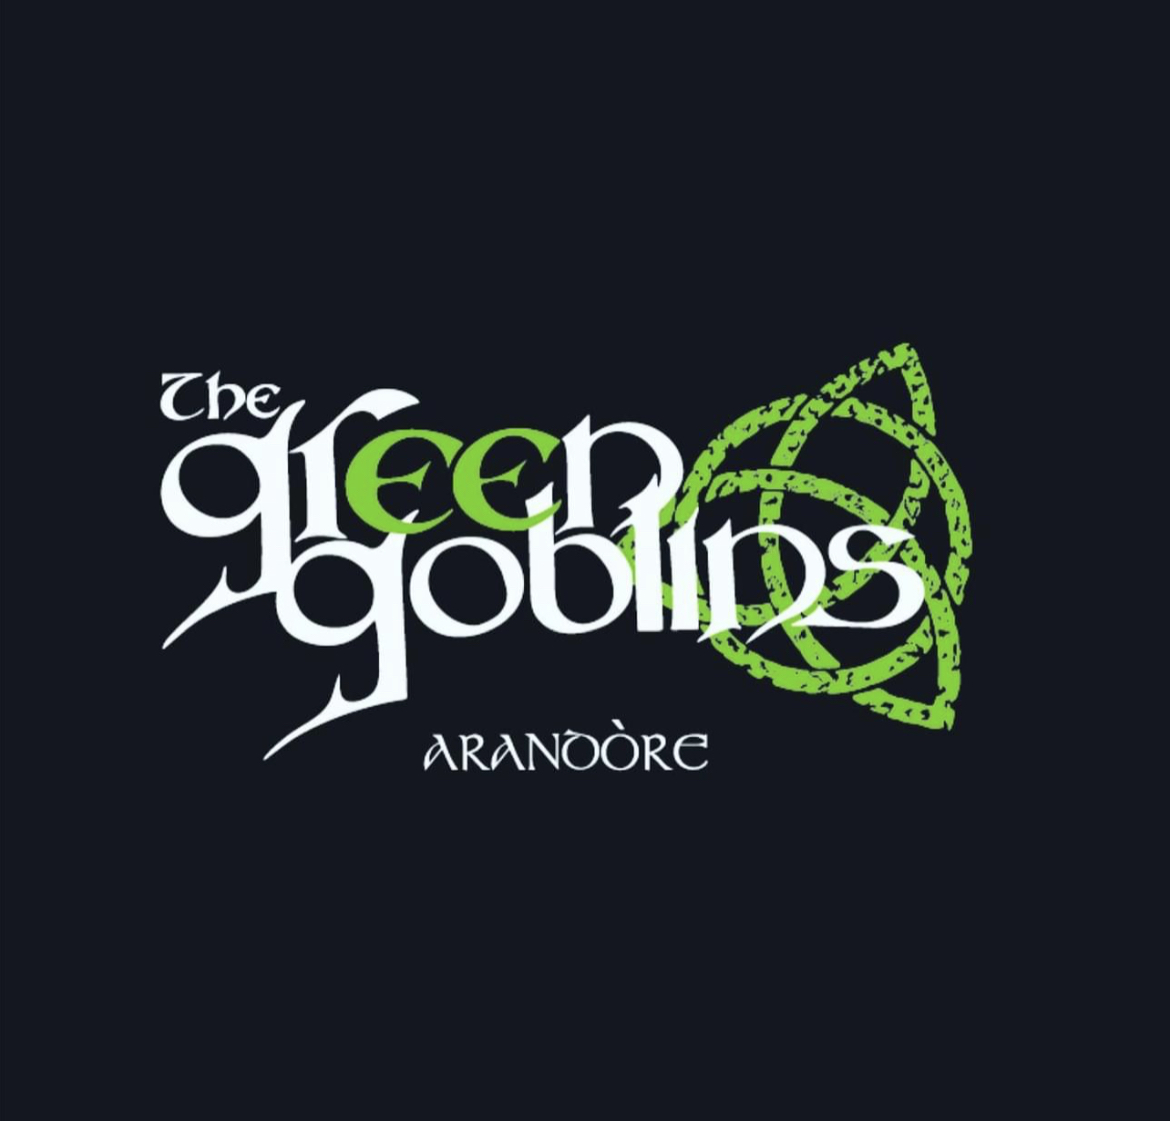 EP Cover Arandóre von The Green Goblins